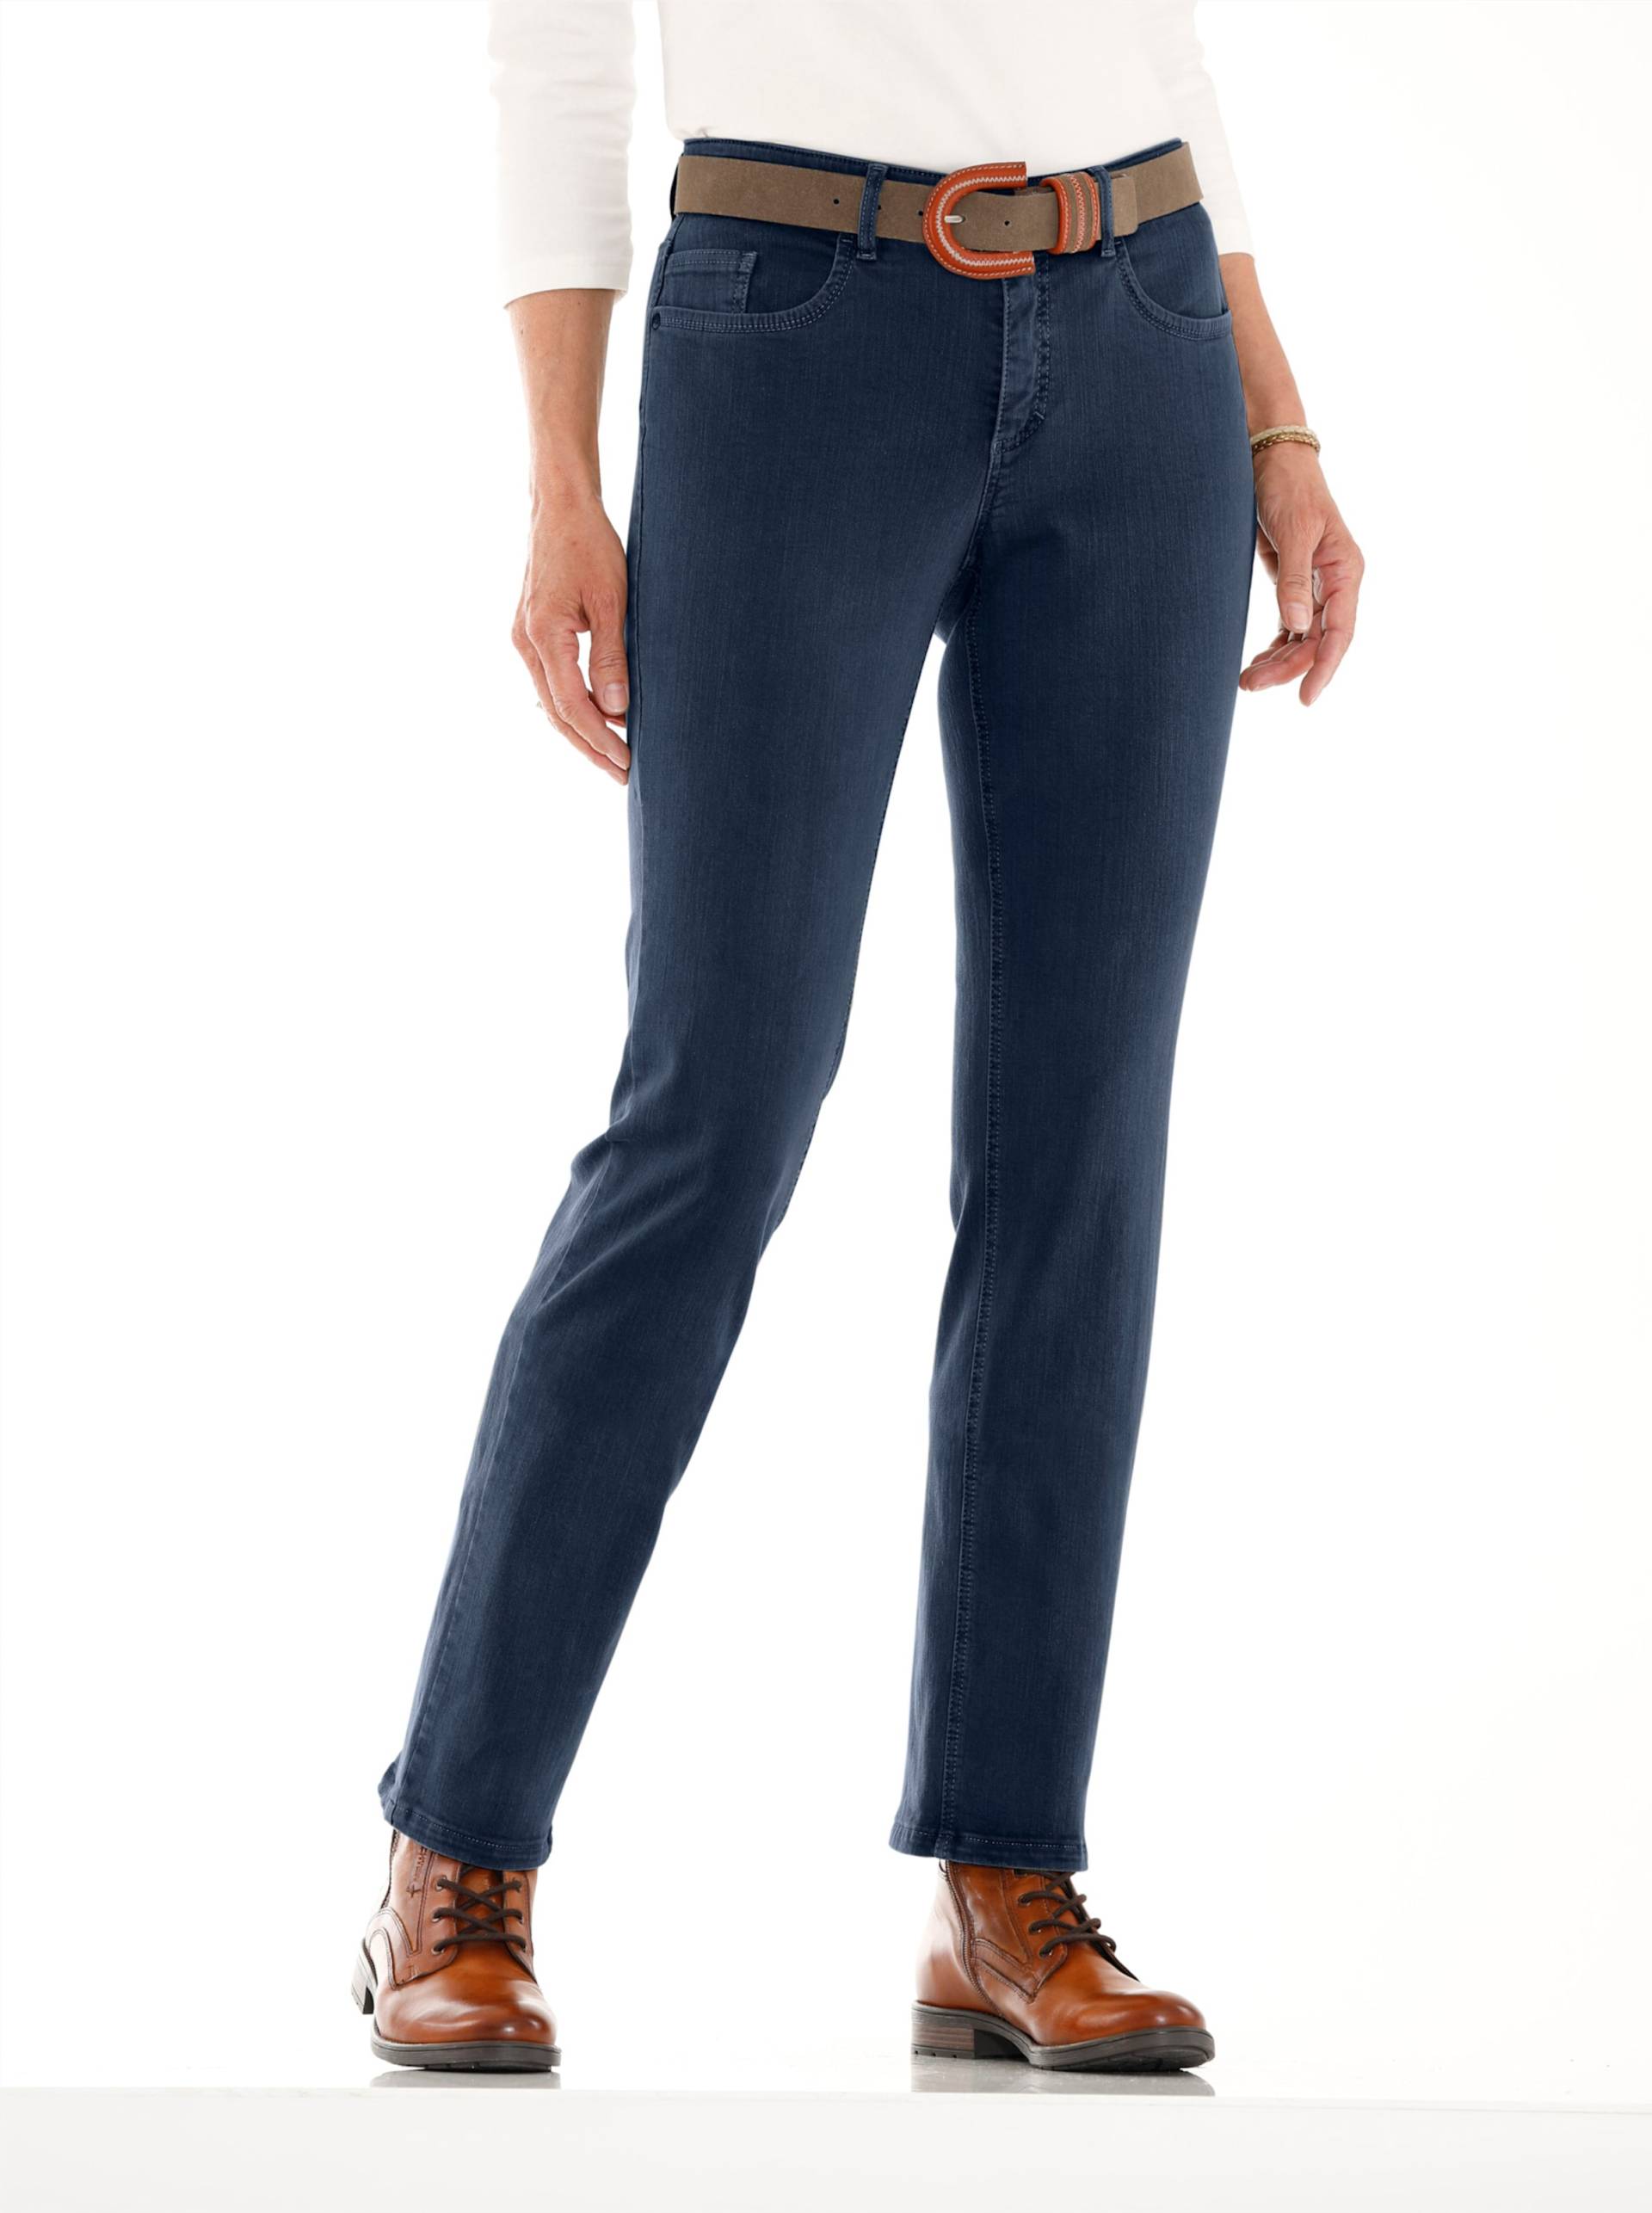 5-Pocket-Jeans in blue-stone-washed von Ascari